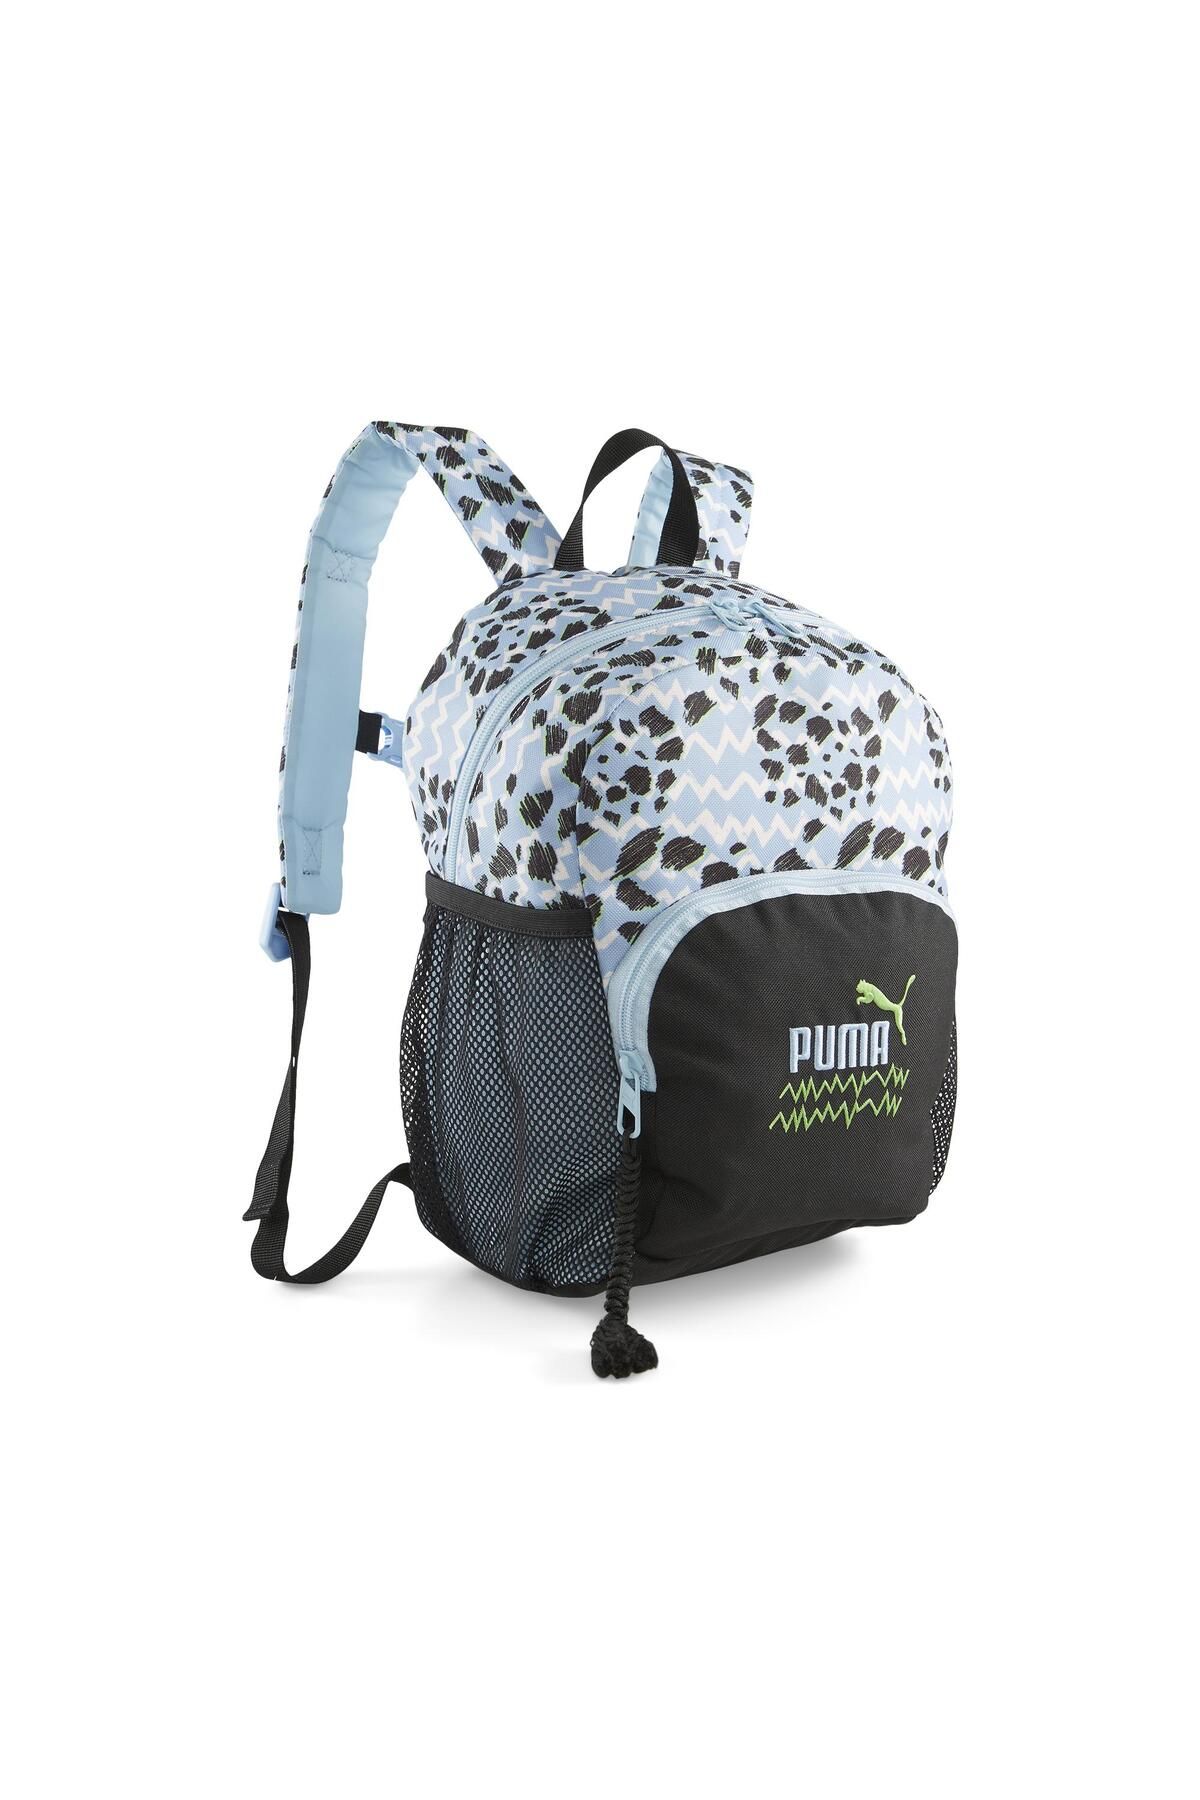 Puma Mixmatch Backpack